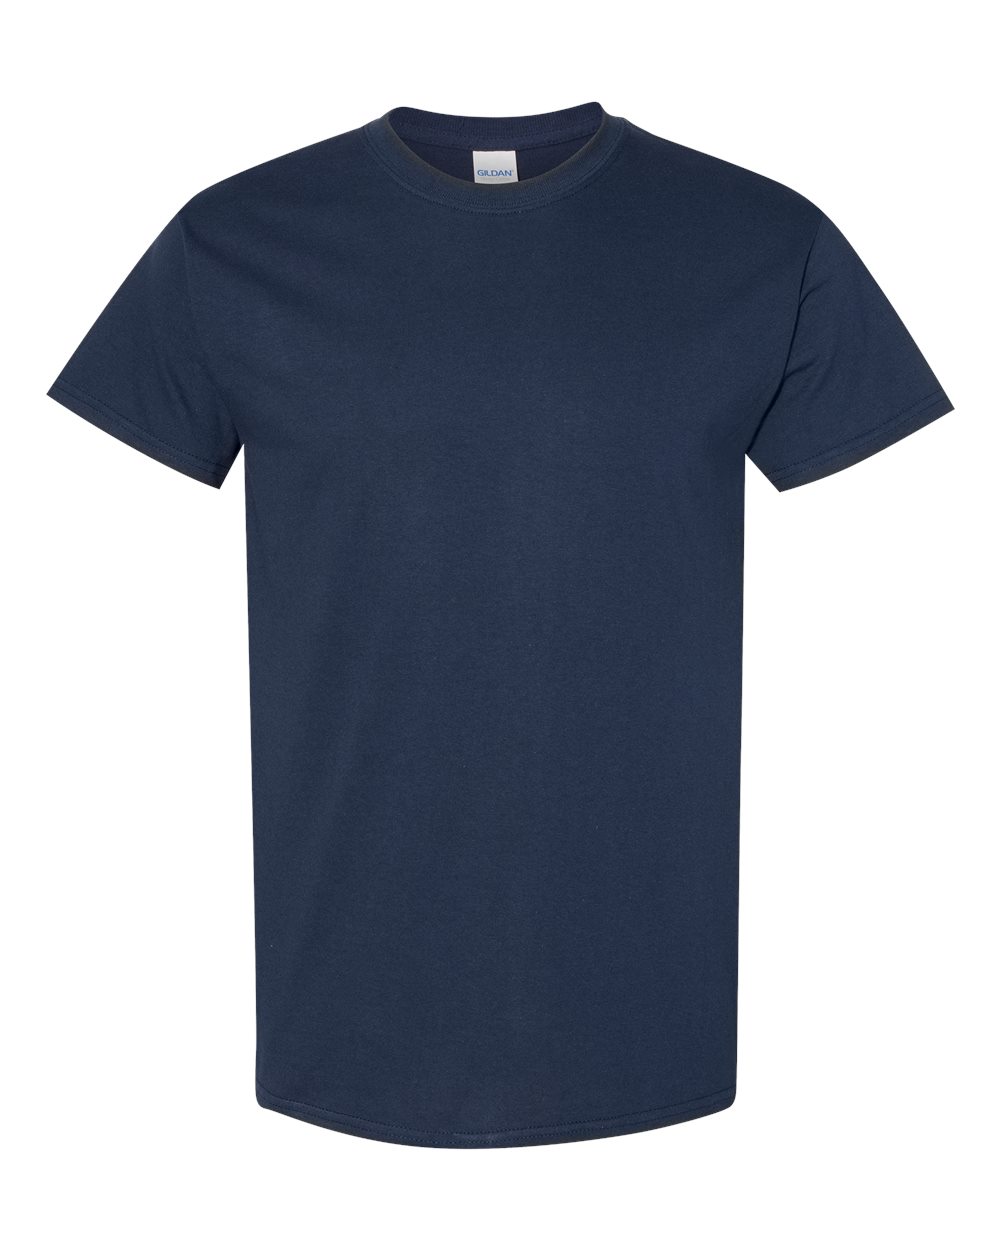 HENCO Navy Blue Sports Dress/kit (T-Shirt & Short Combo) for